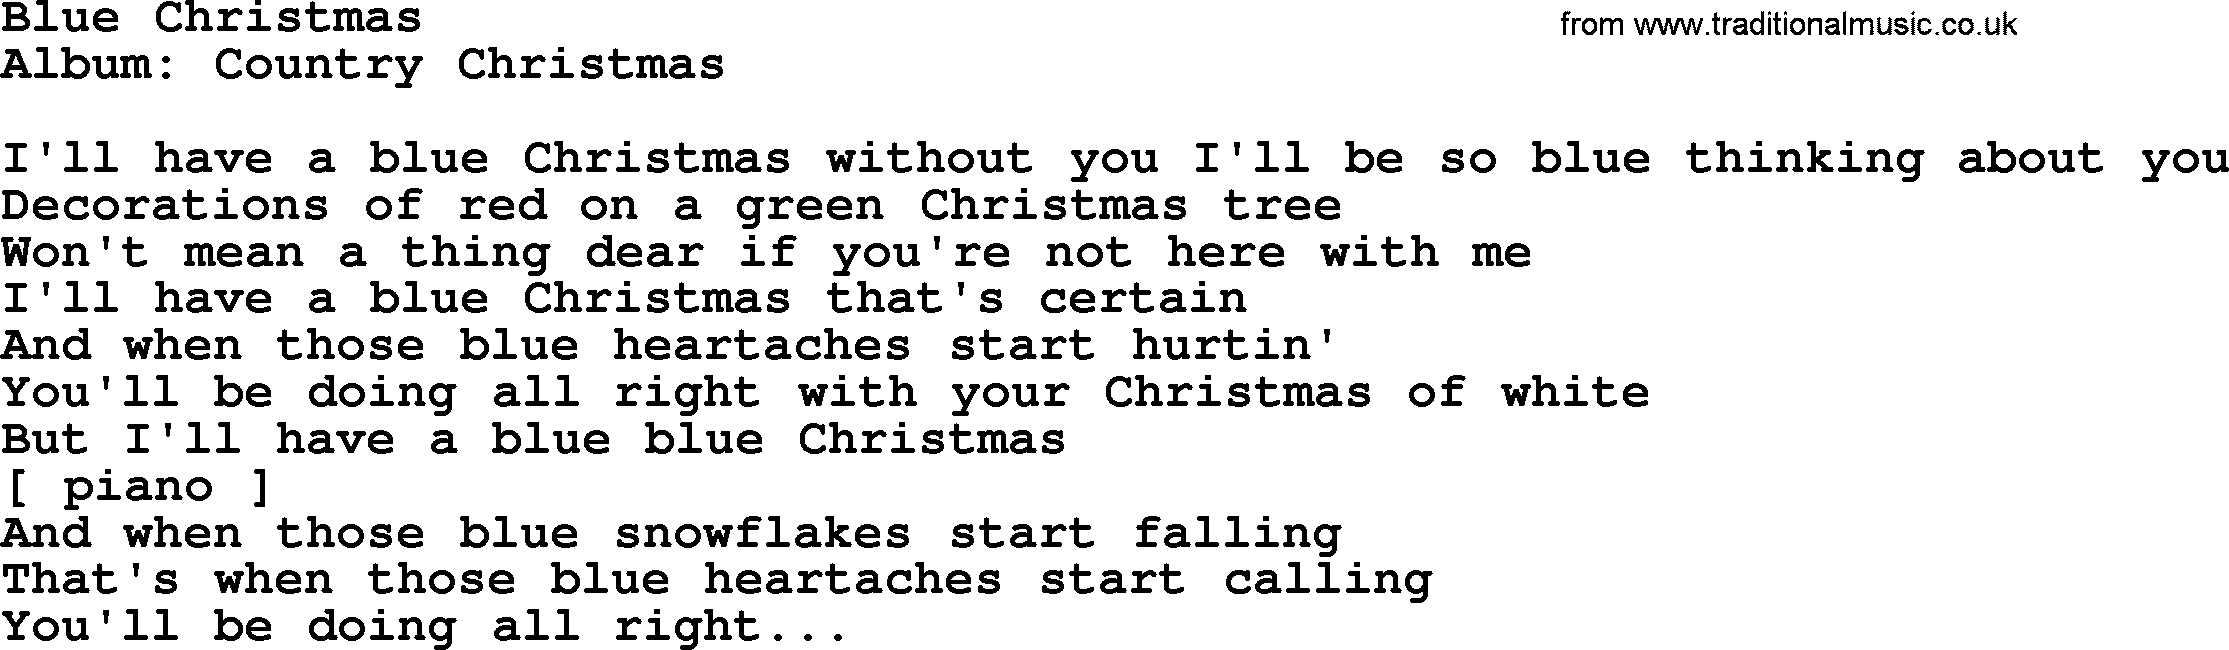 Loretta Lynn song: Blue Christmas lyrics